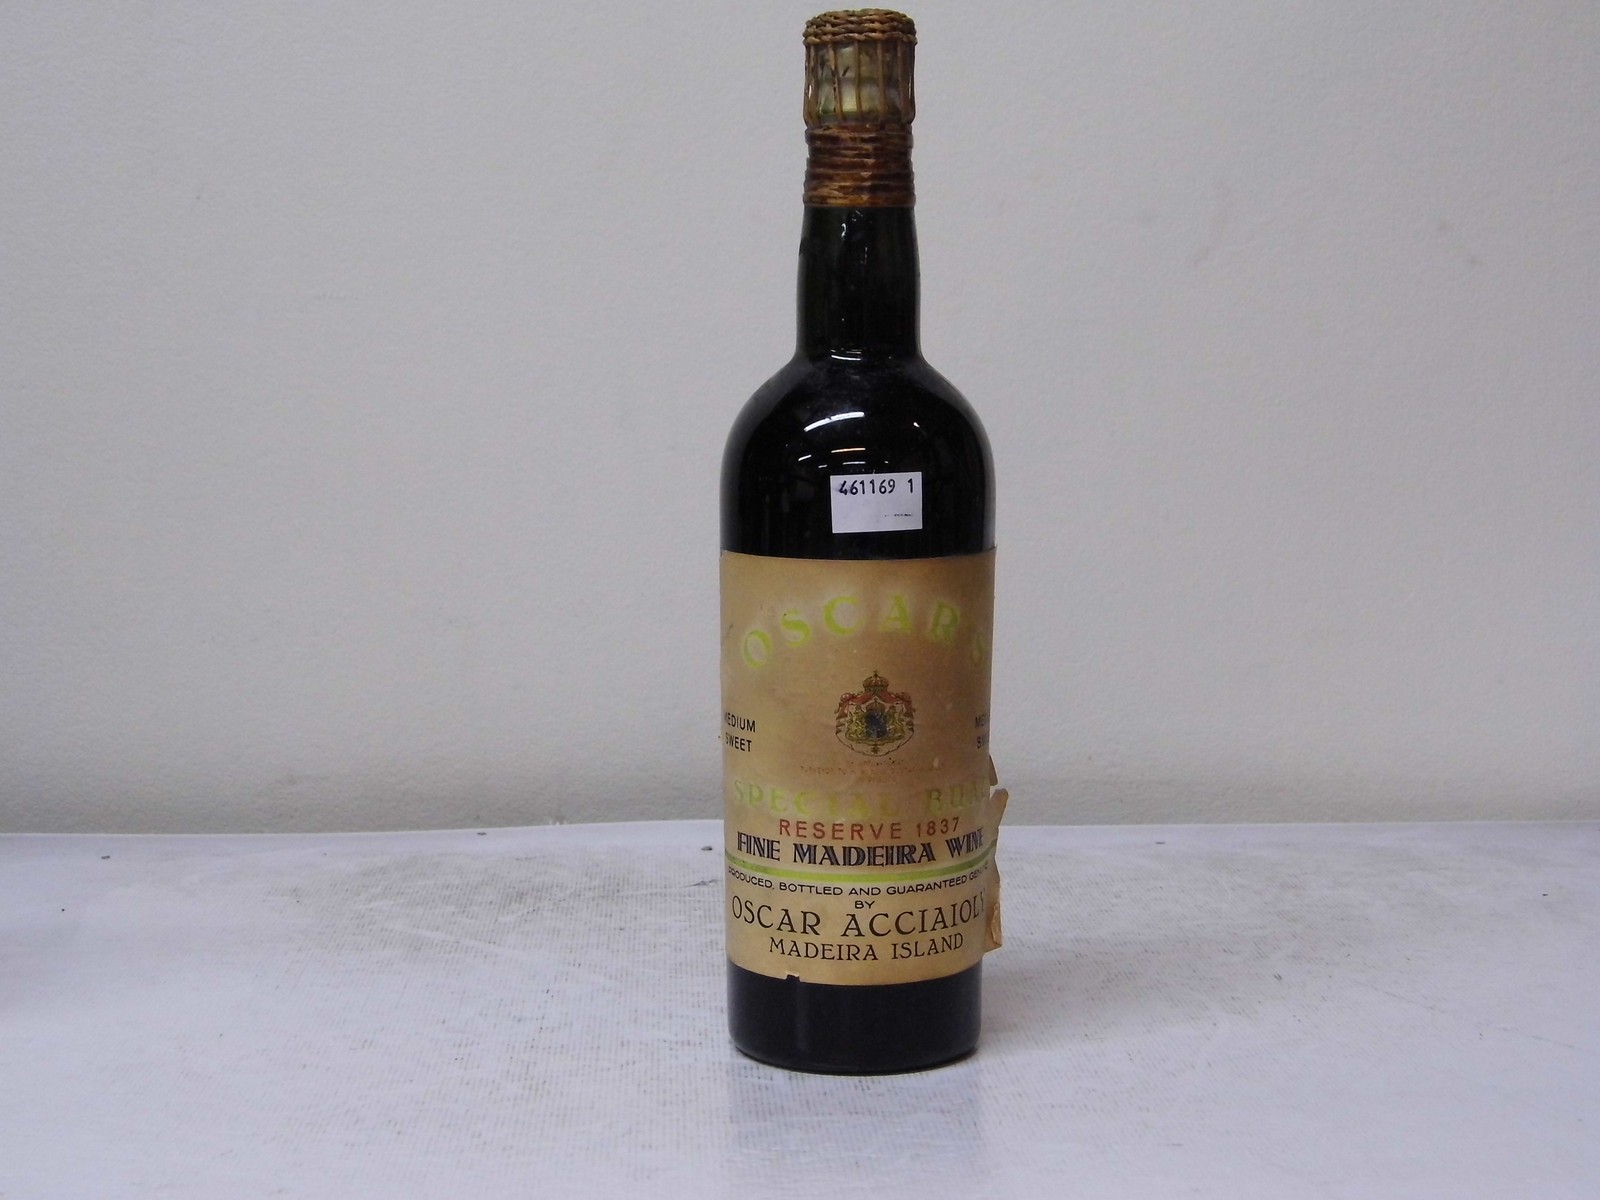 Bual Maderia 1837OscarsLabel readsSpecial BualReserve 1837Madeira Winebottled and guaranteed